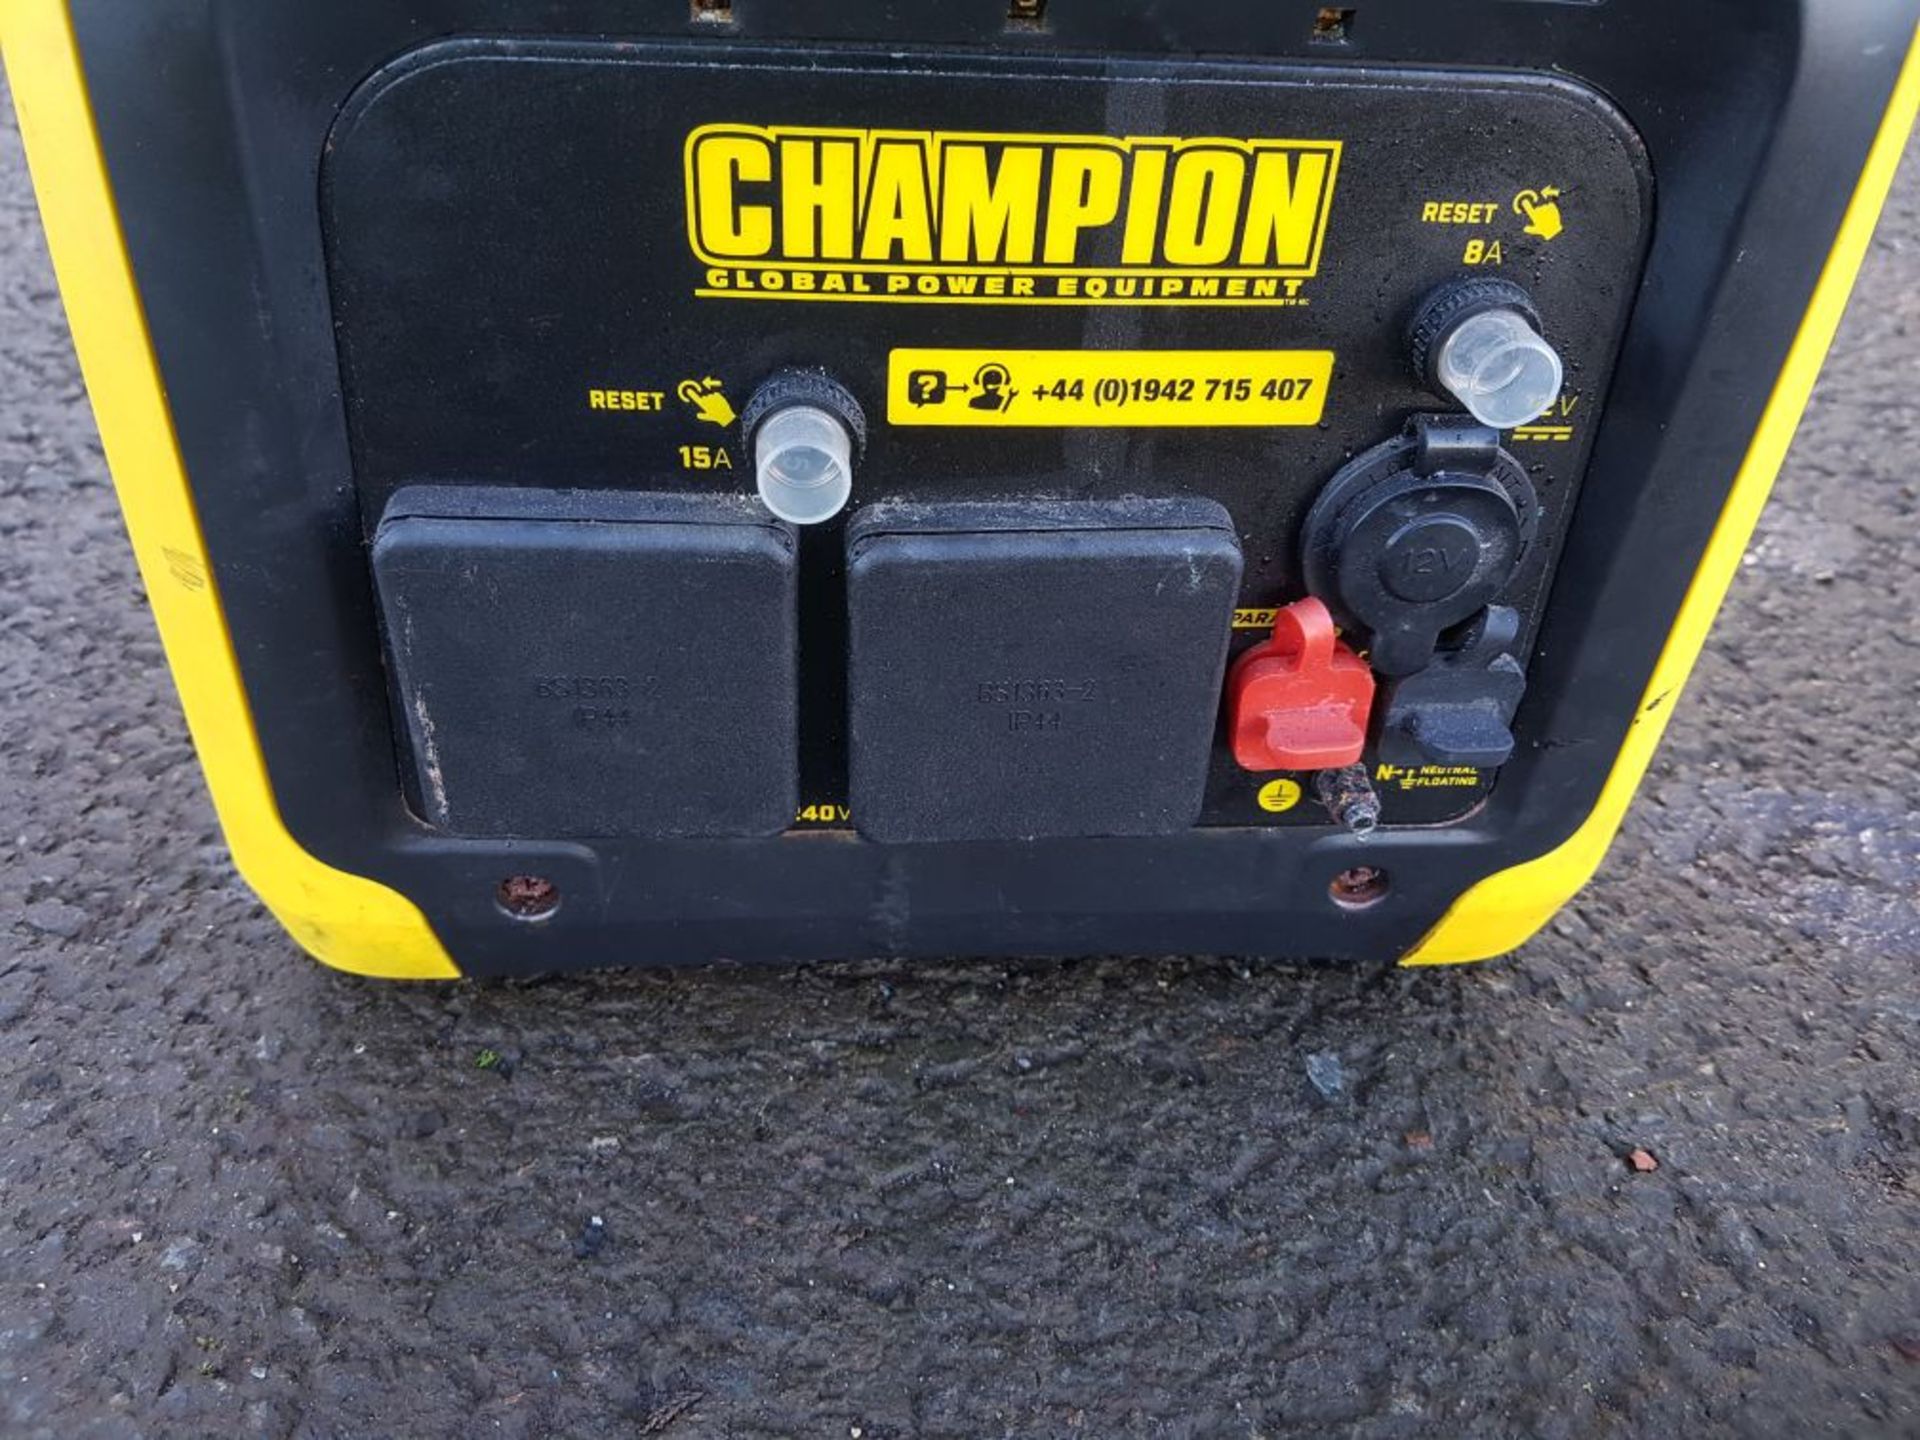 Champion 82001i-DF Dual Fuel Inverter Petrol Generator - Image 3 of 5